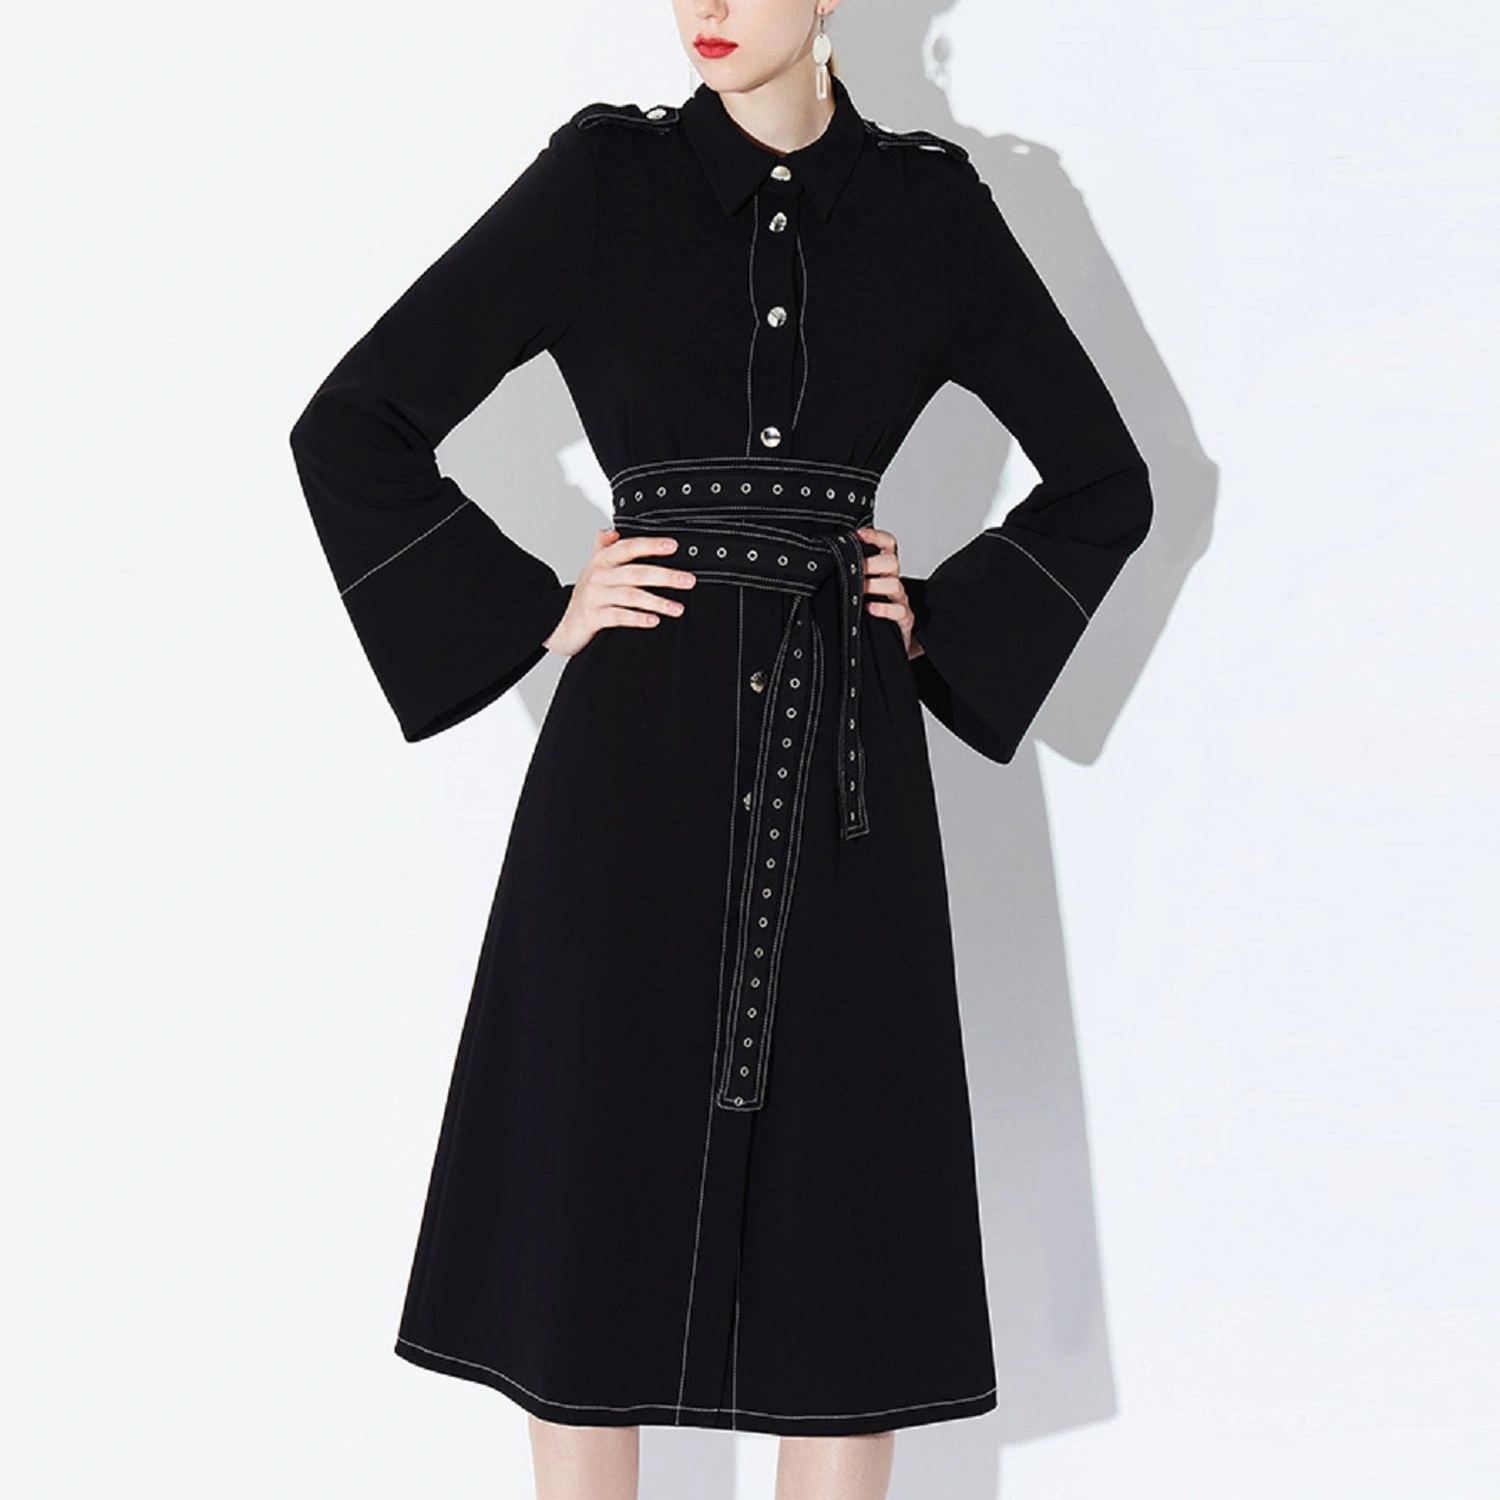 New Design Long Sleeve Slim Autumn High Fashion Woman′s Dress Coat